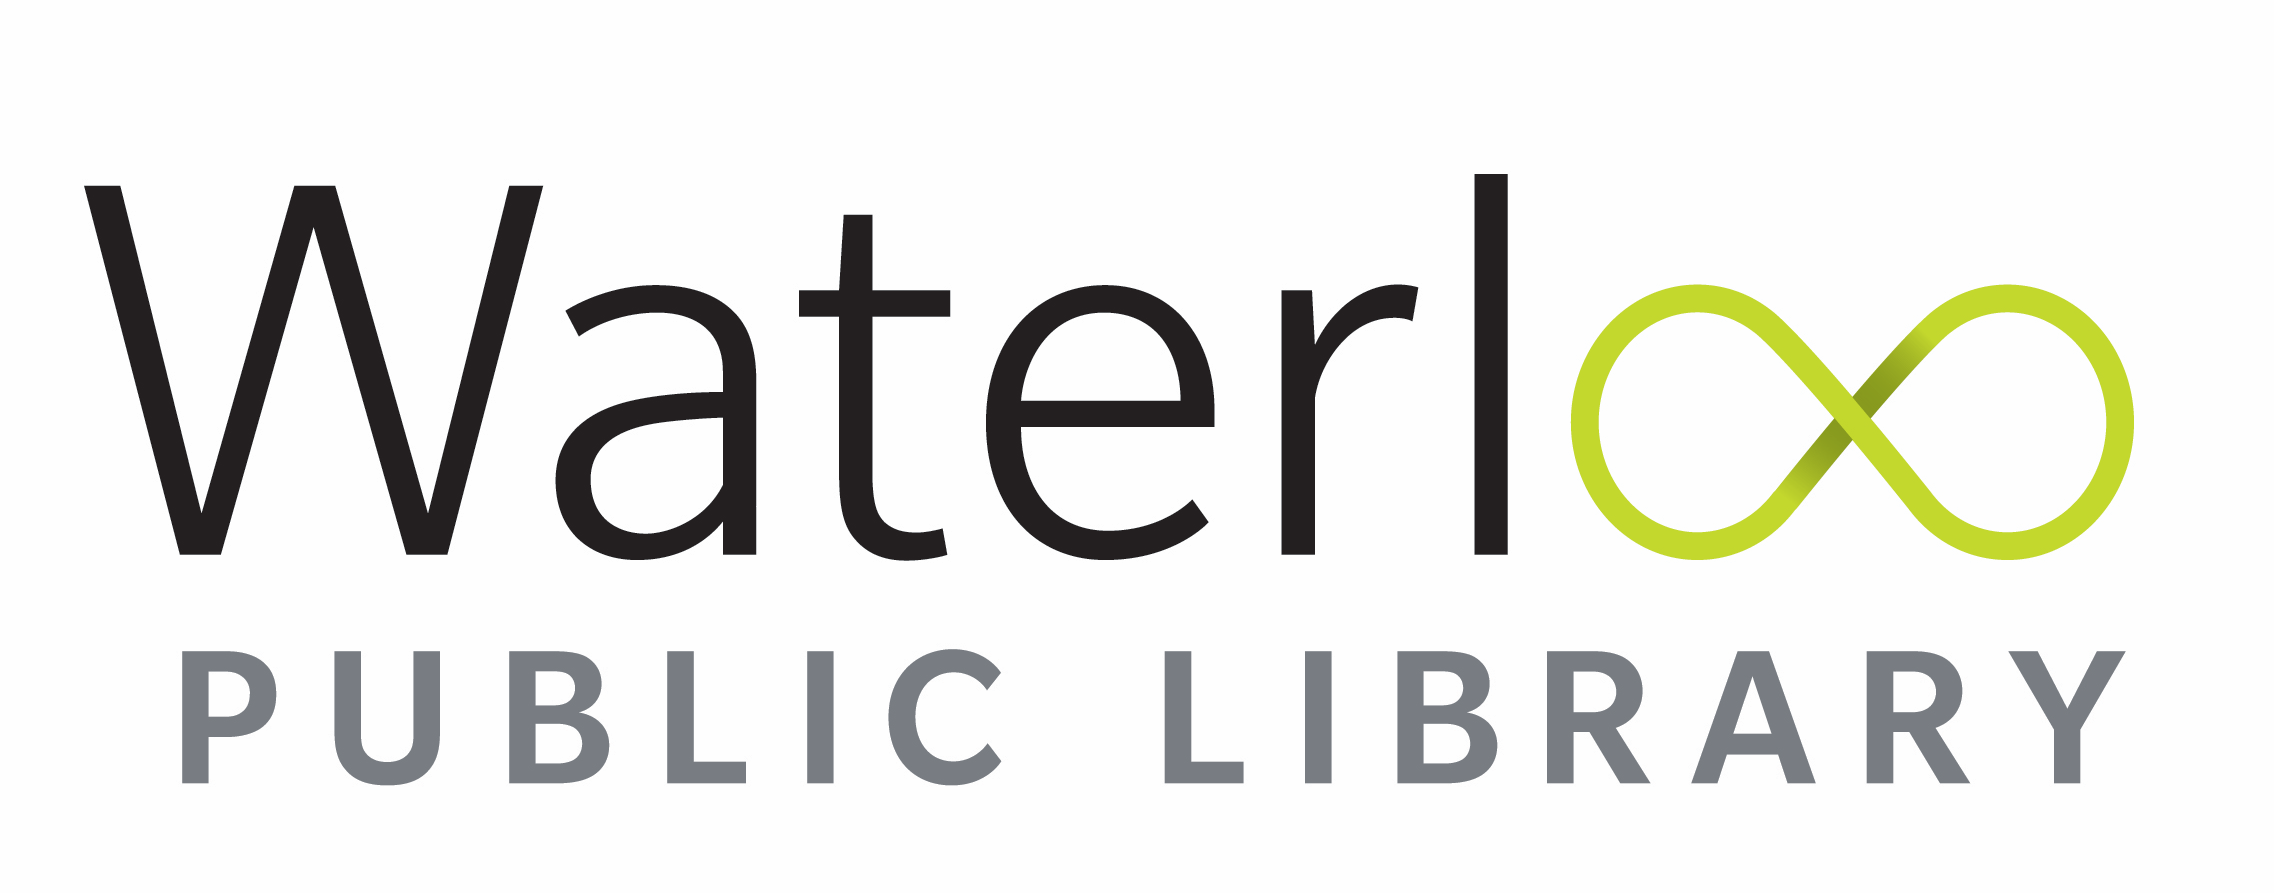 Waterloo Public Library logo.